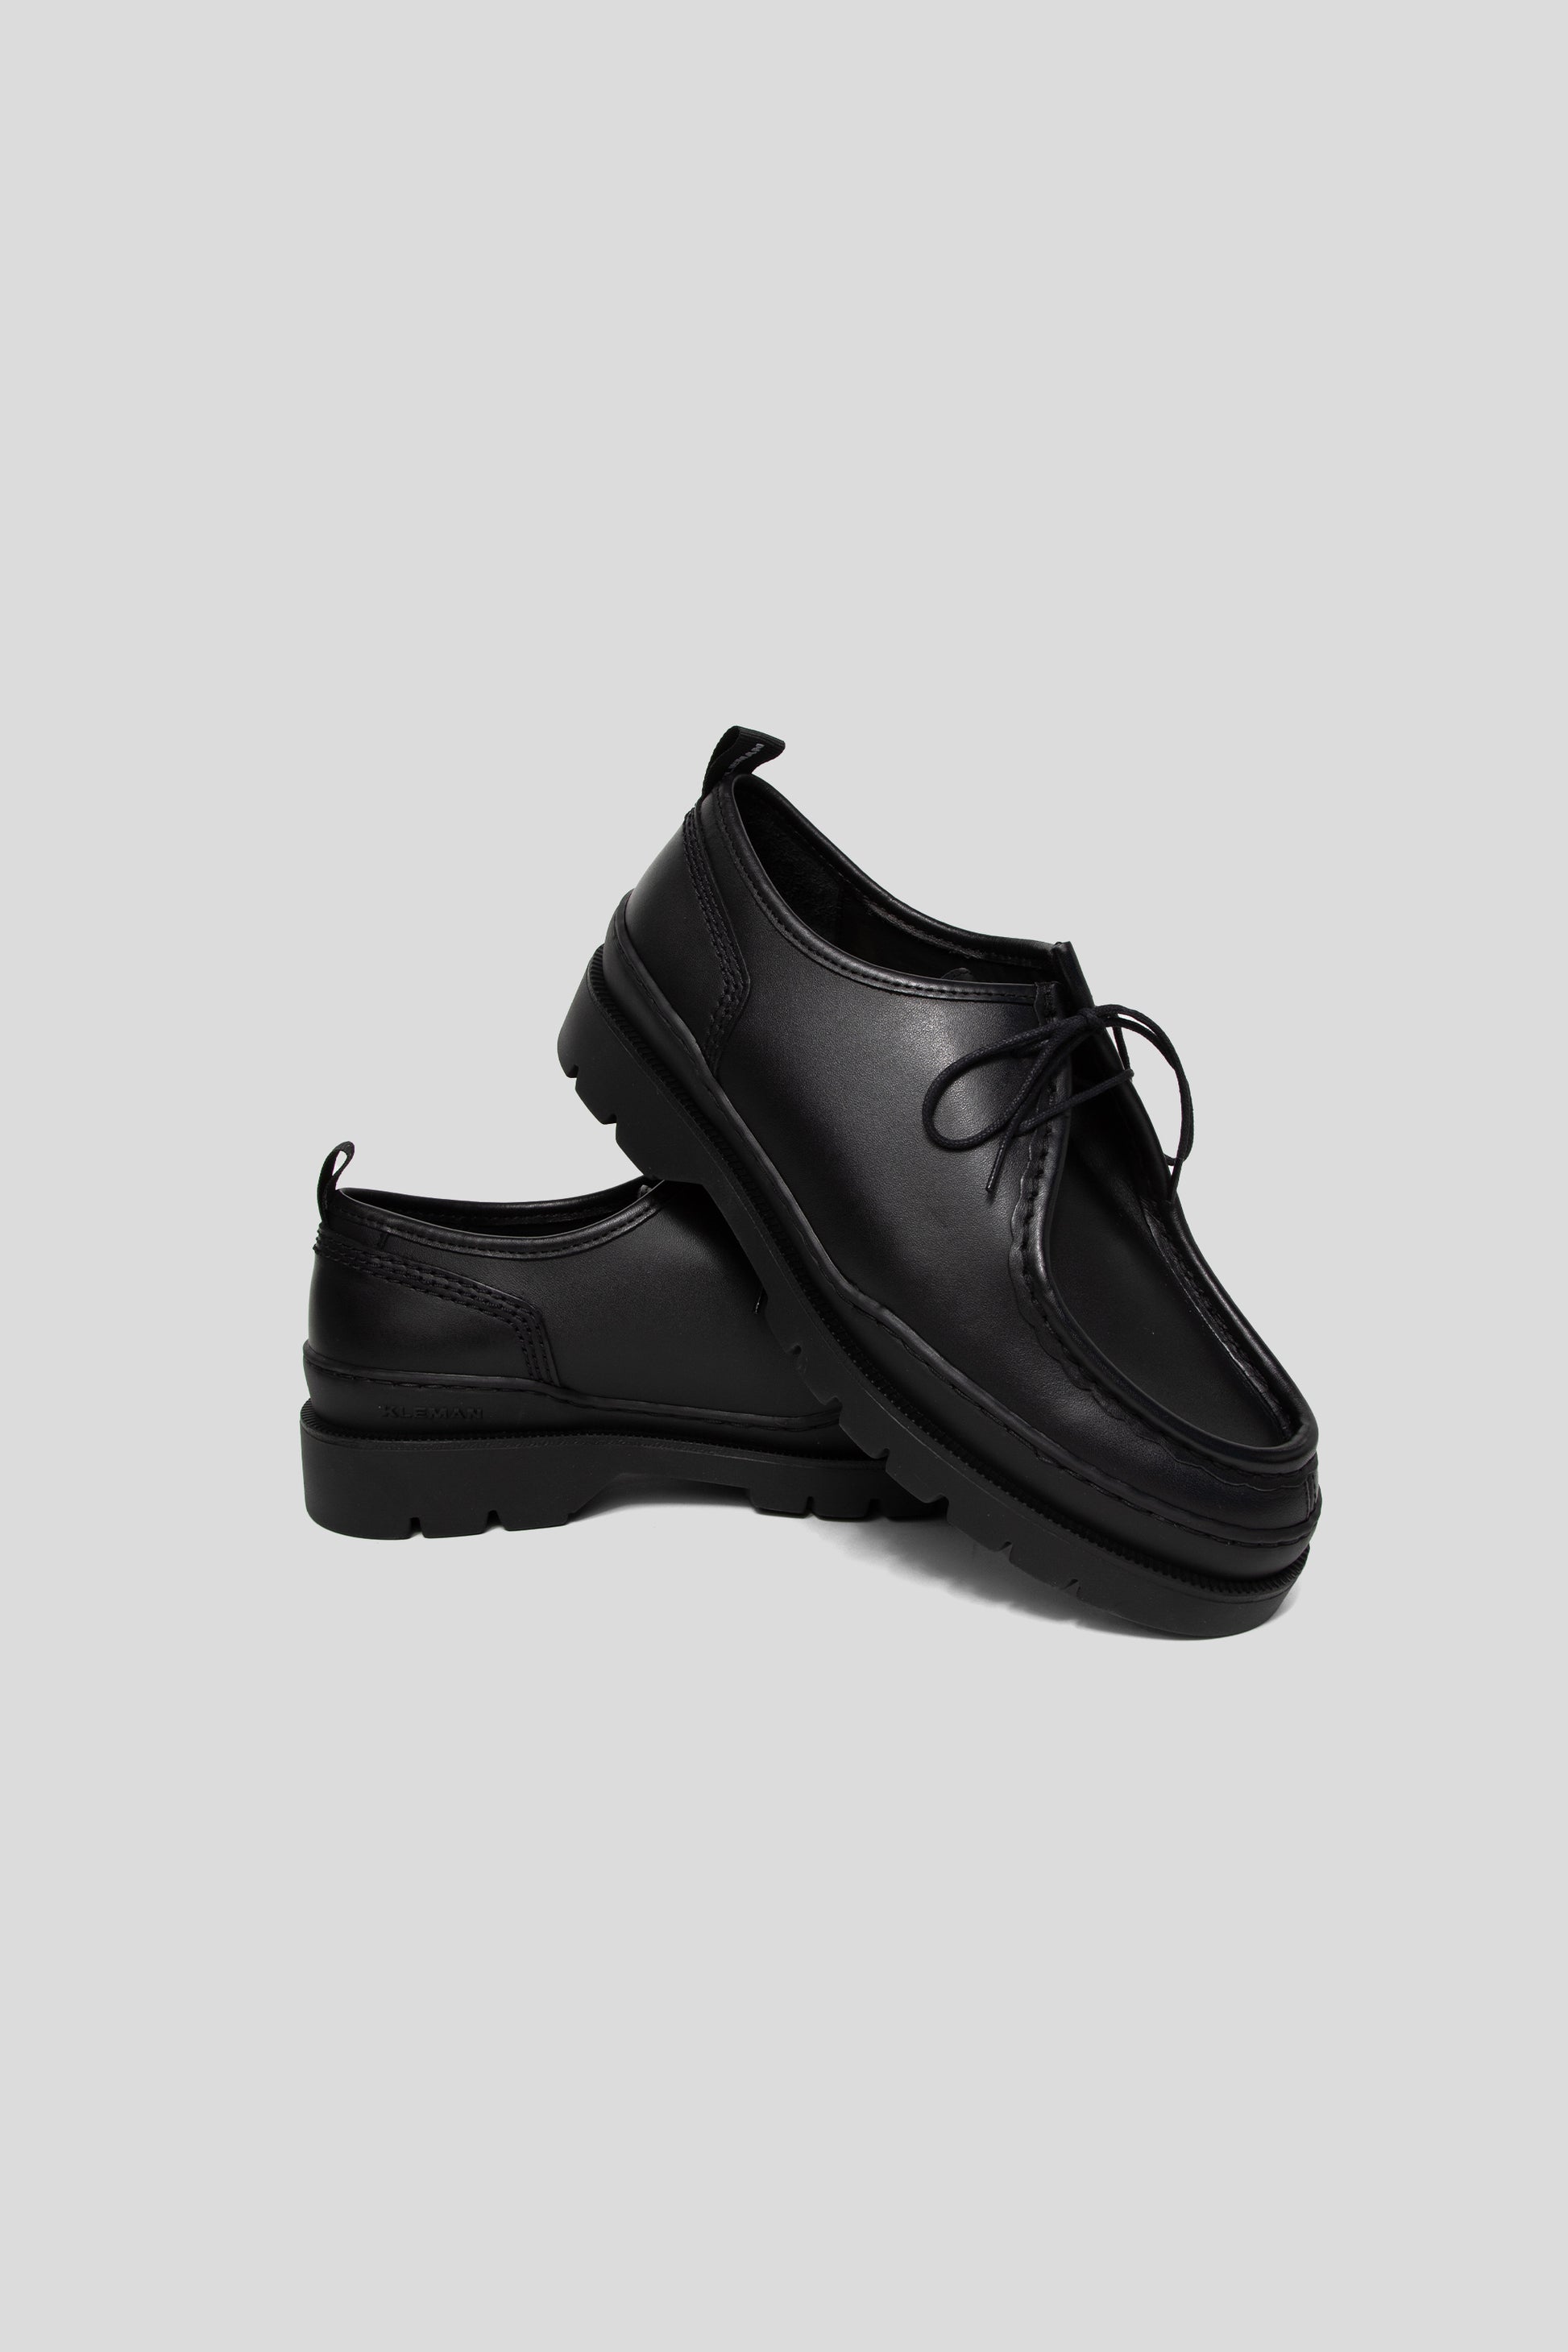 Kleman Women's Major Shoe in Black